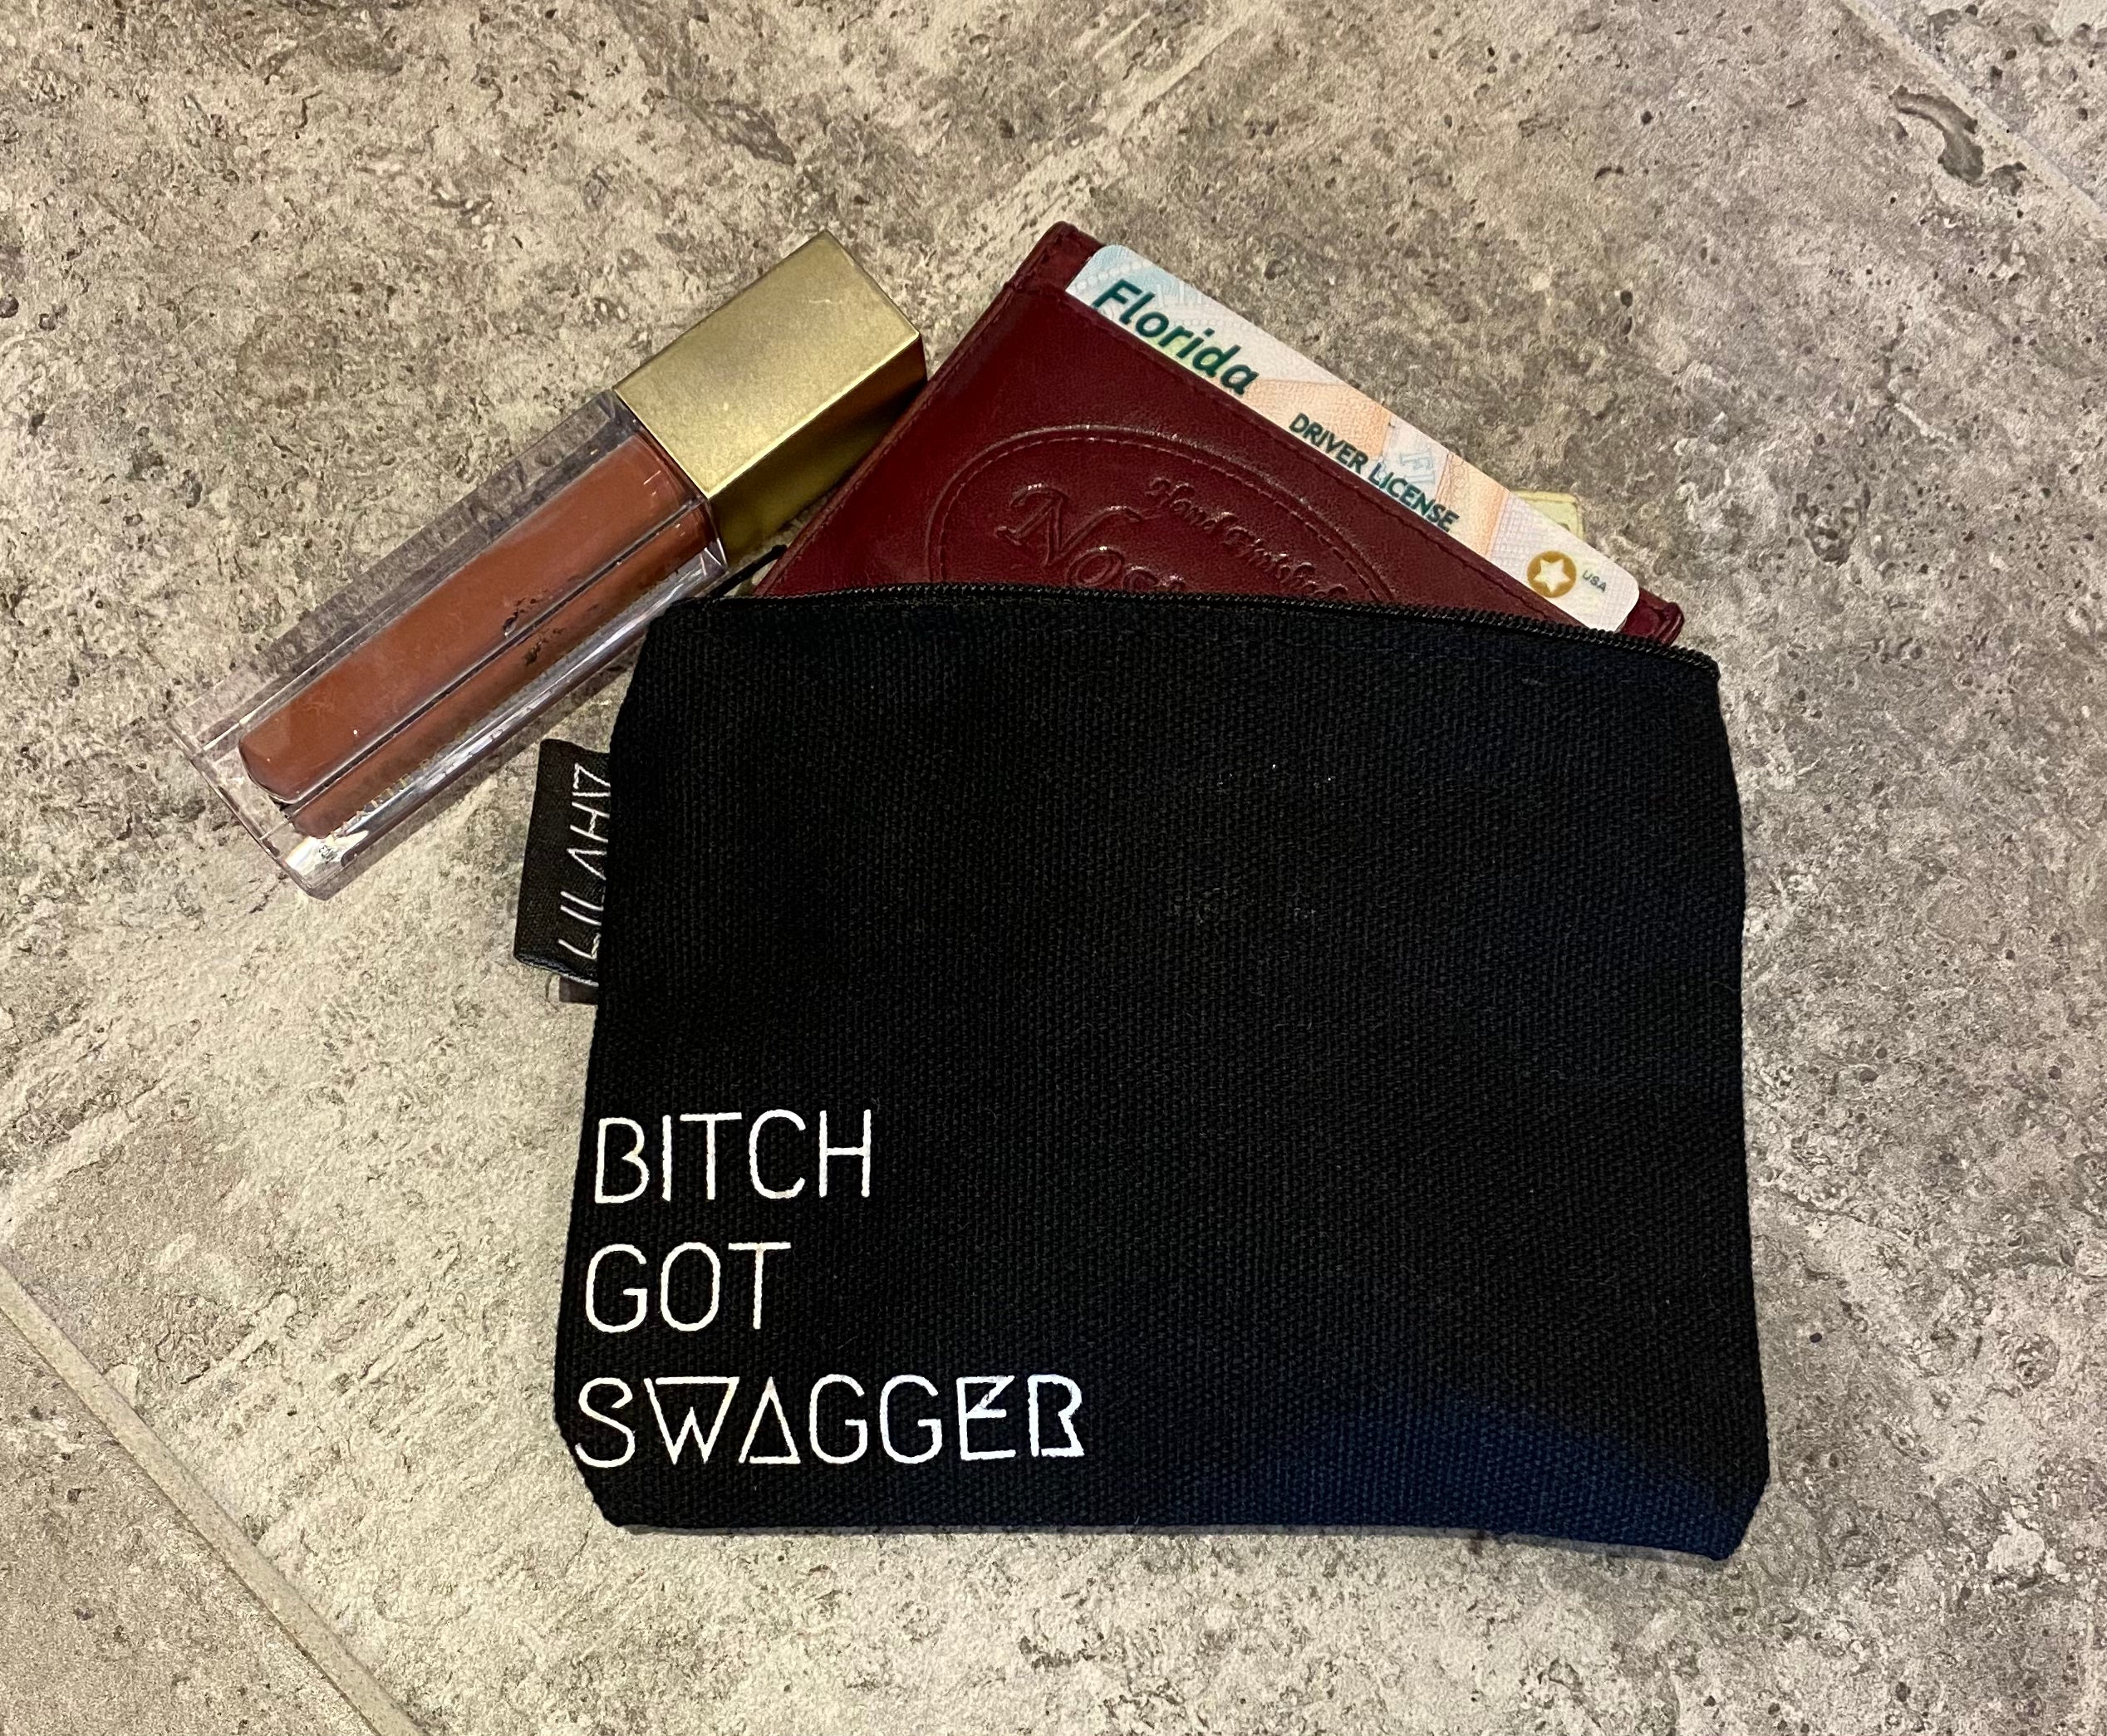 Bitch got swagger bag